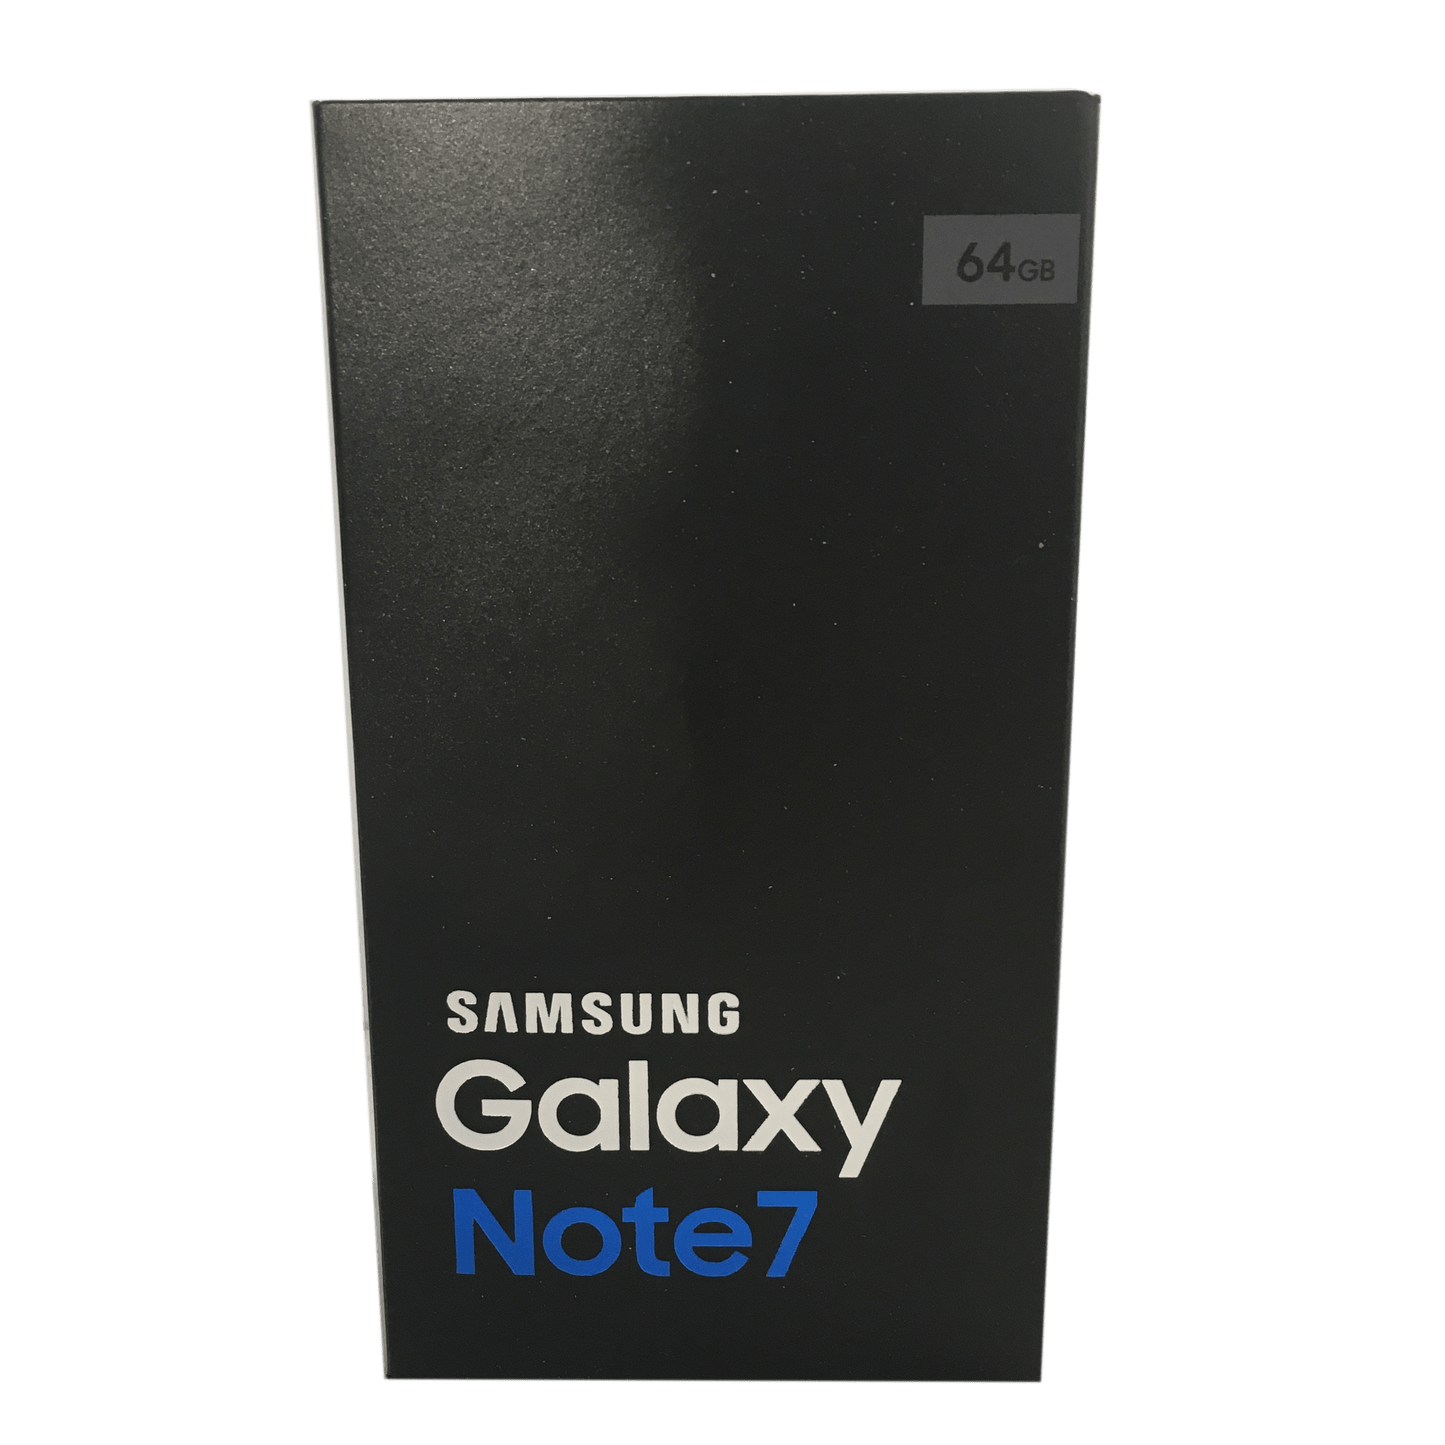 Samsung Galaxy Note7 Silver Titanium Kit Empty Box SKU 000335-2